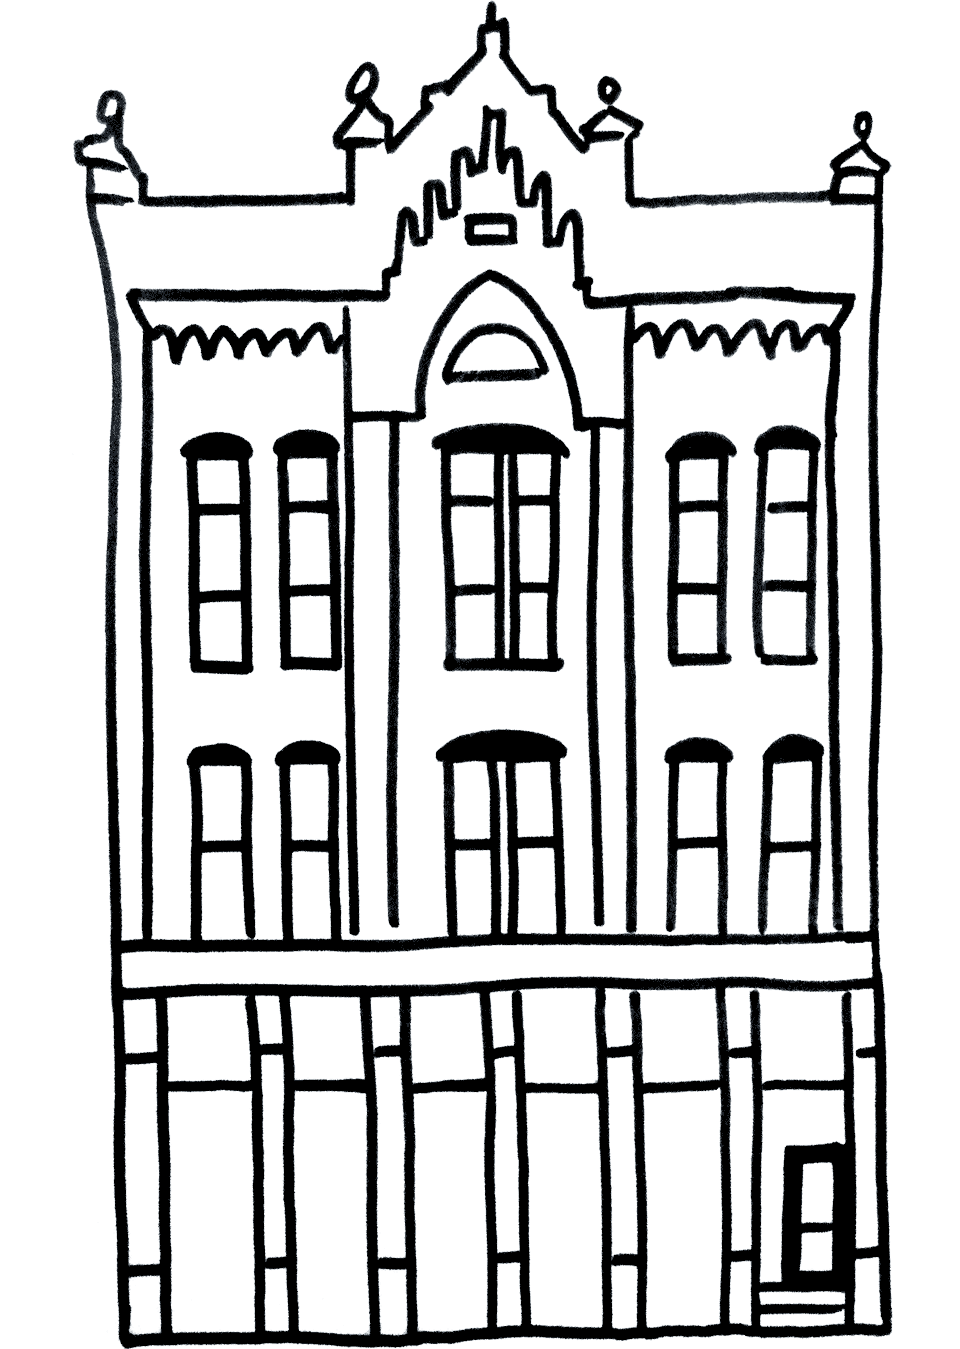 Line drawing of the historic Dakota Business College located in Downtown Fargo, North Dakota, home to Nupolitan design studio